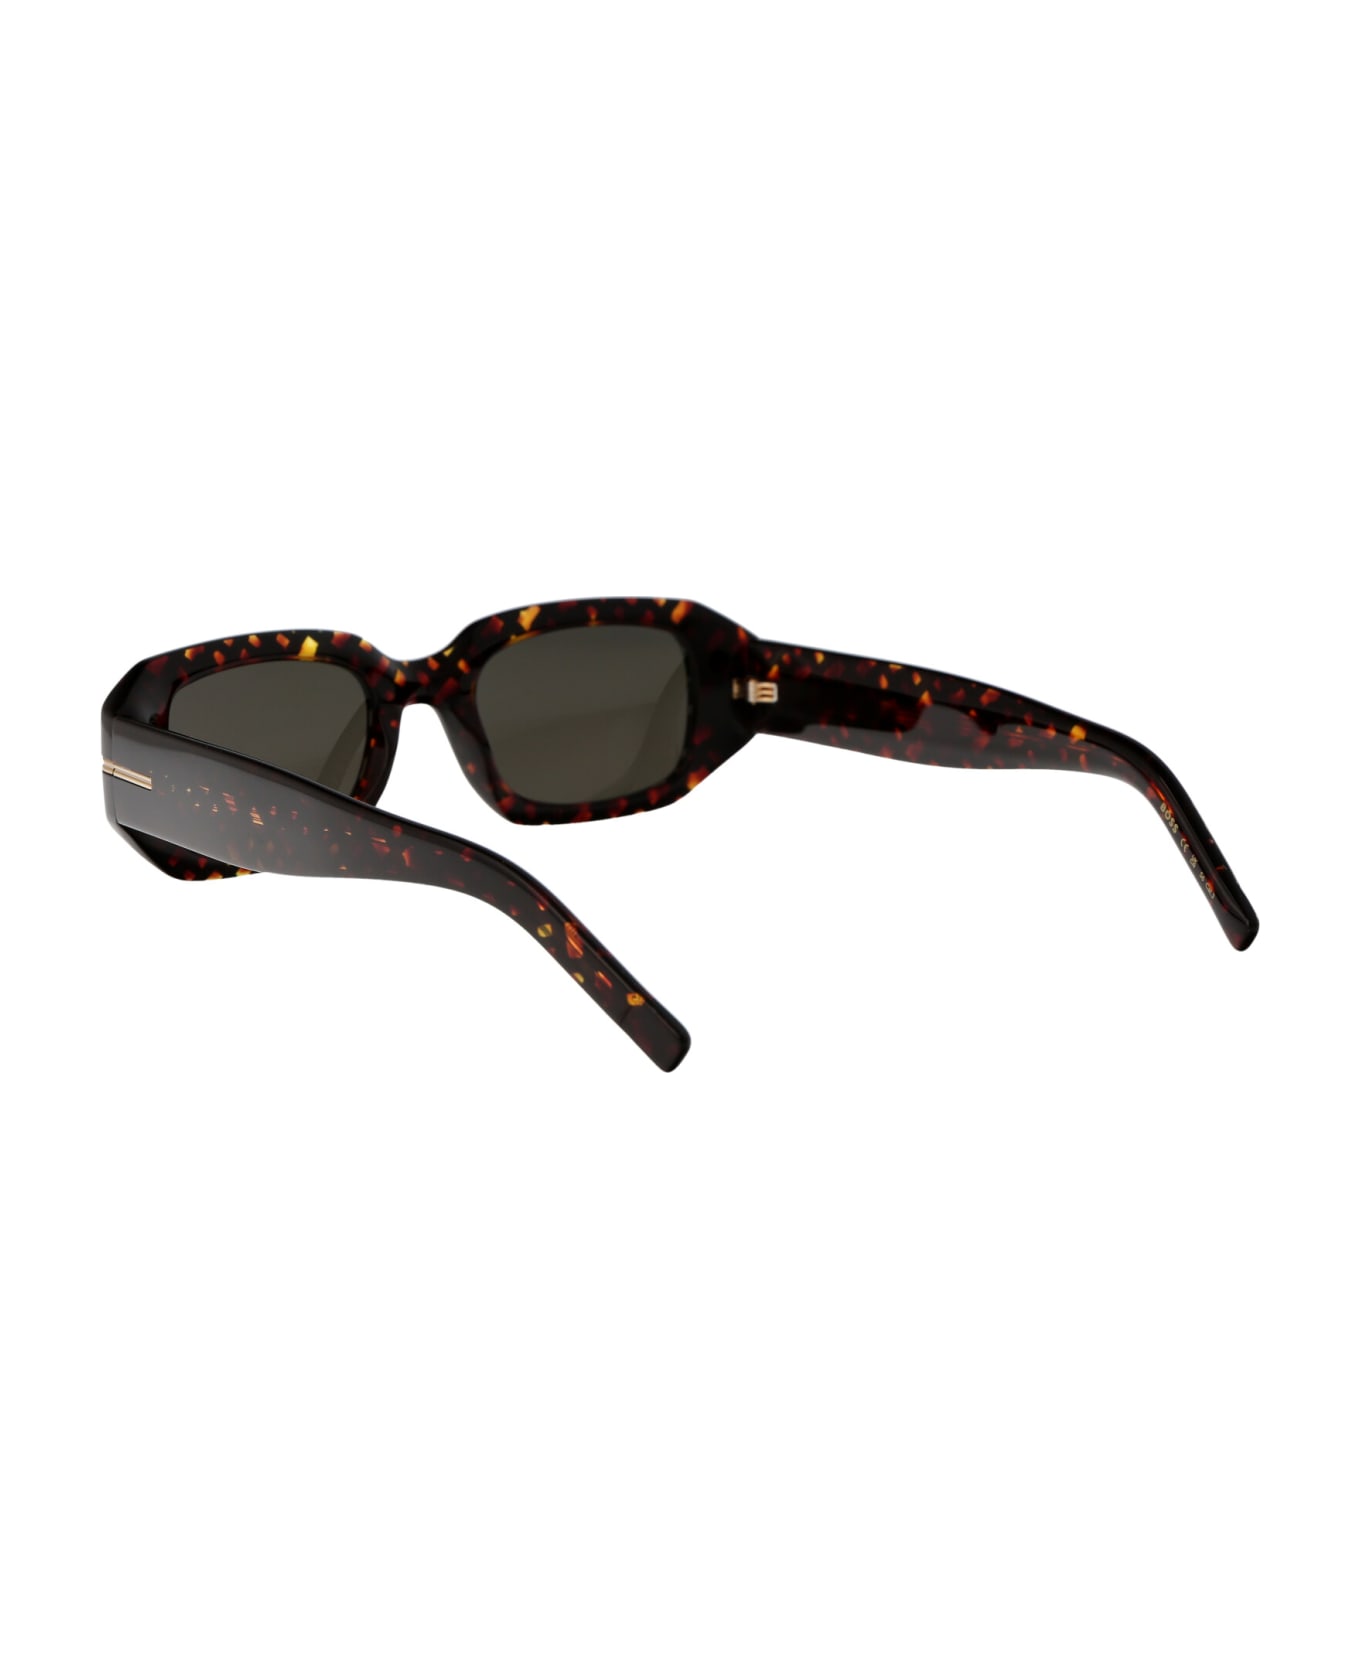 Hugo Boss Boss 1608/s Sunglasses - 2VMIR HAVANA PATTERN